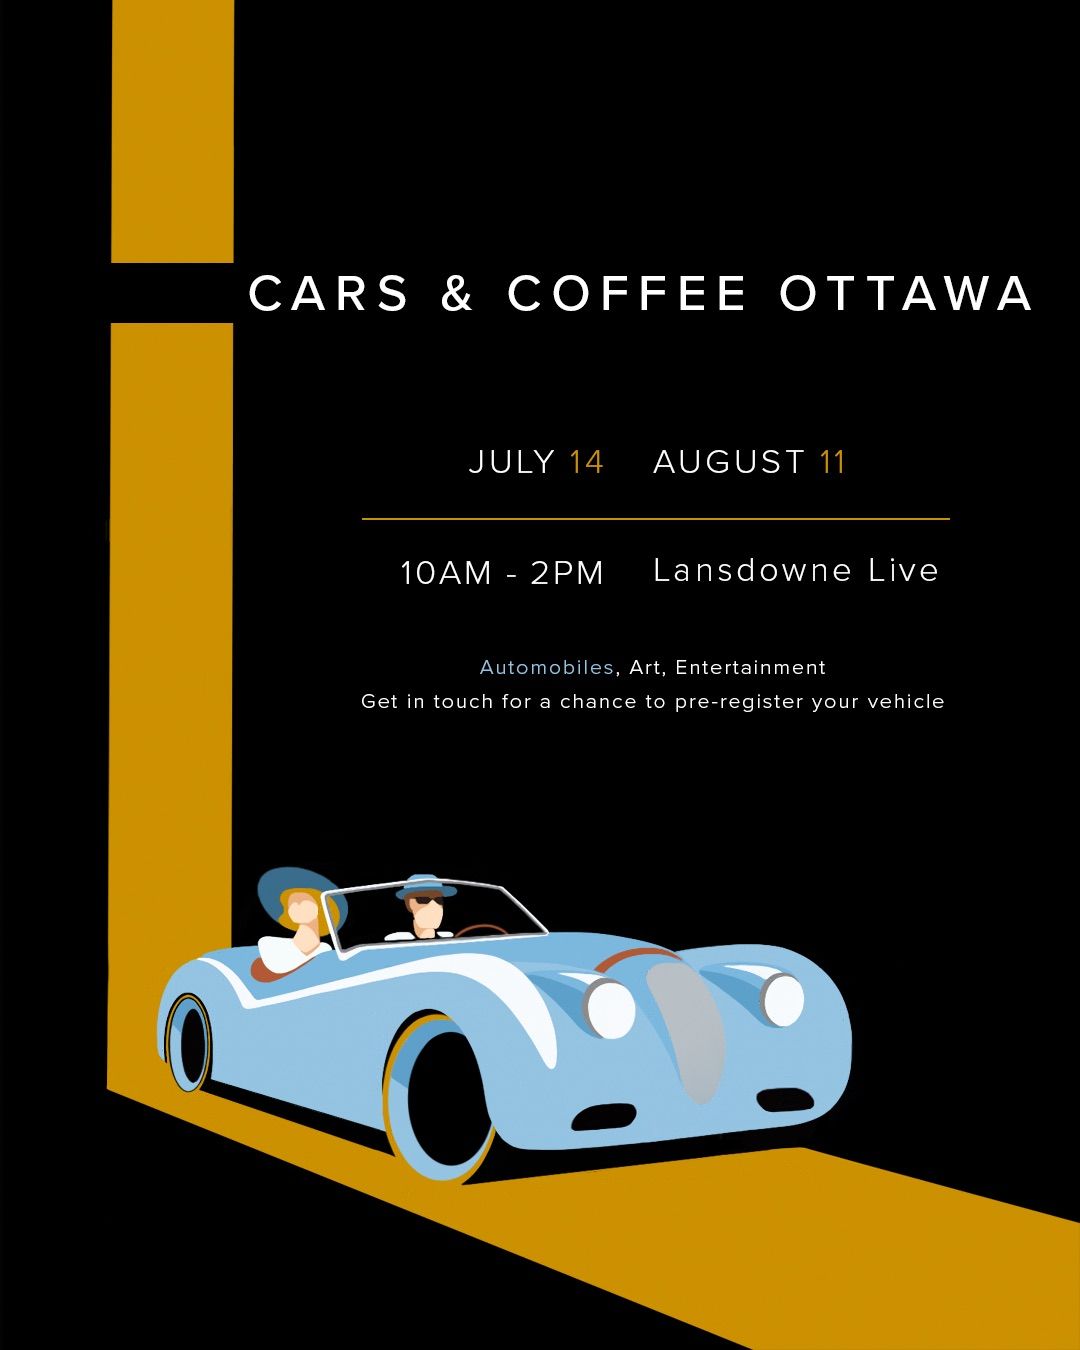 Cars & Coffee Ottawa